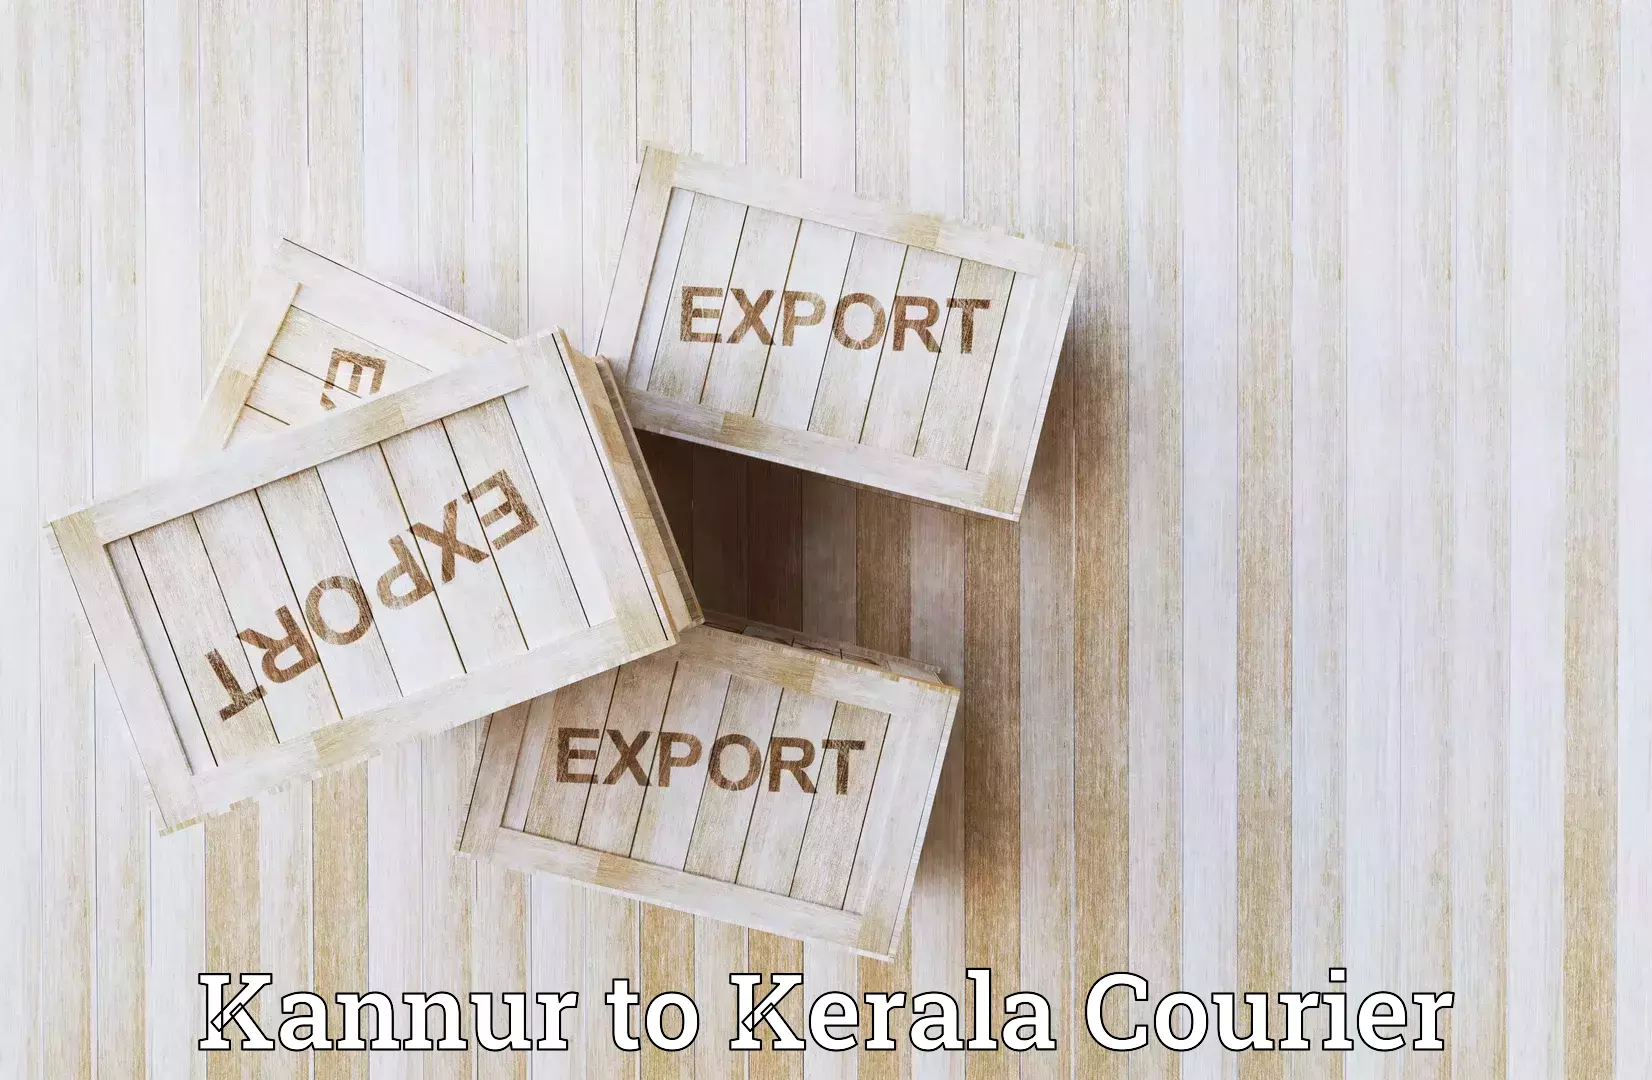 Tracking updates Kannur to Cochin Port Kochi